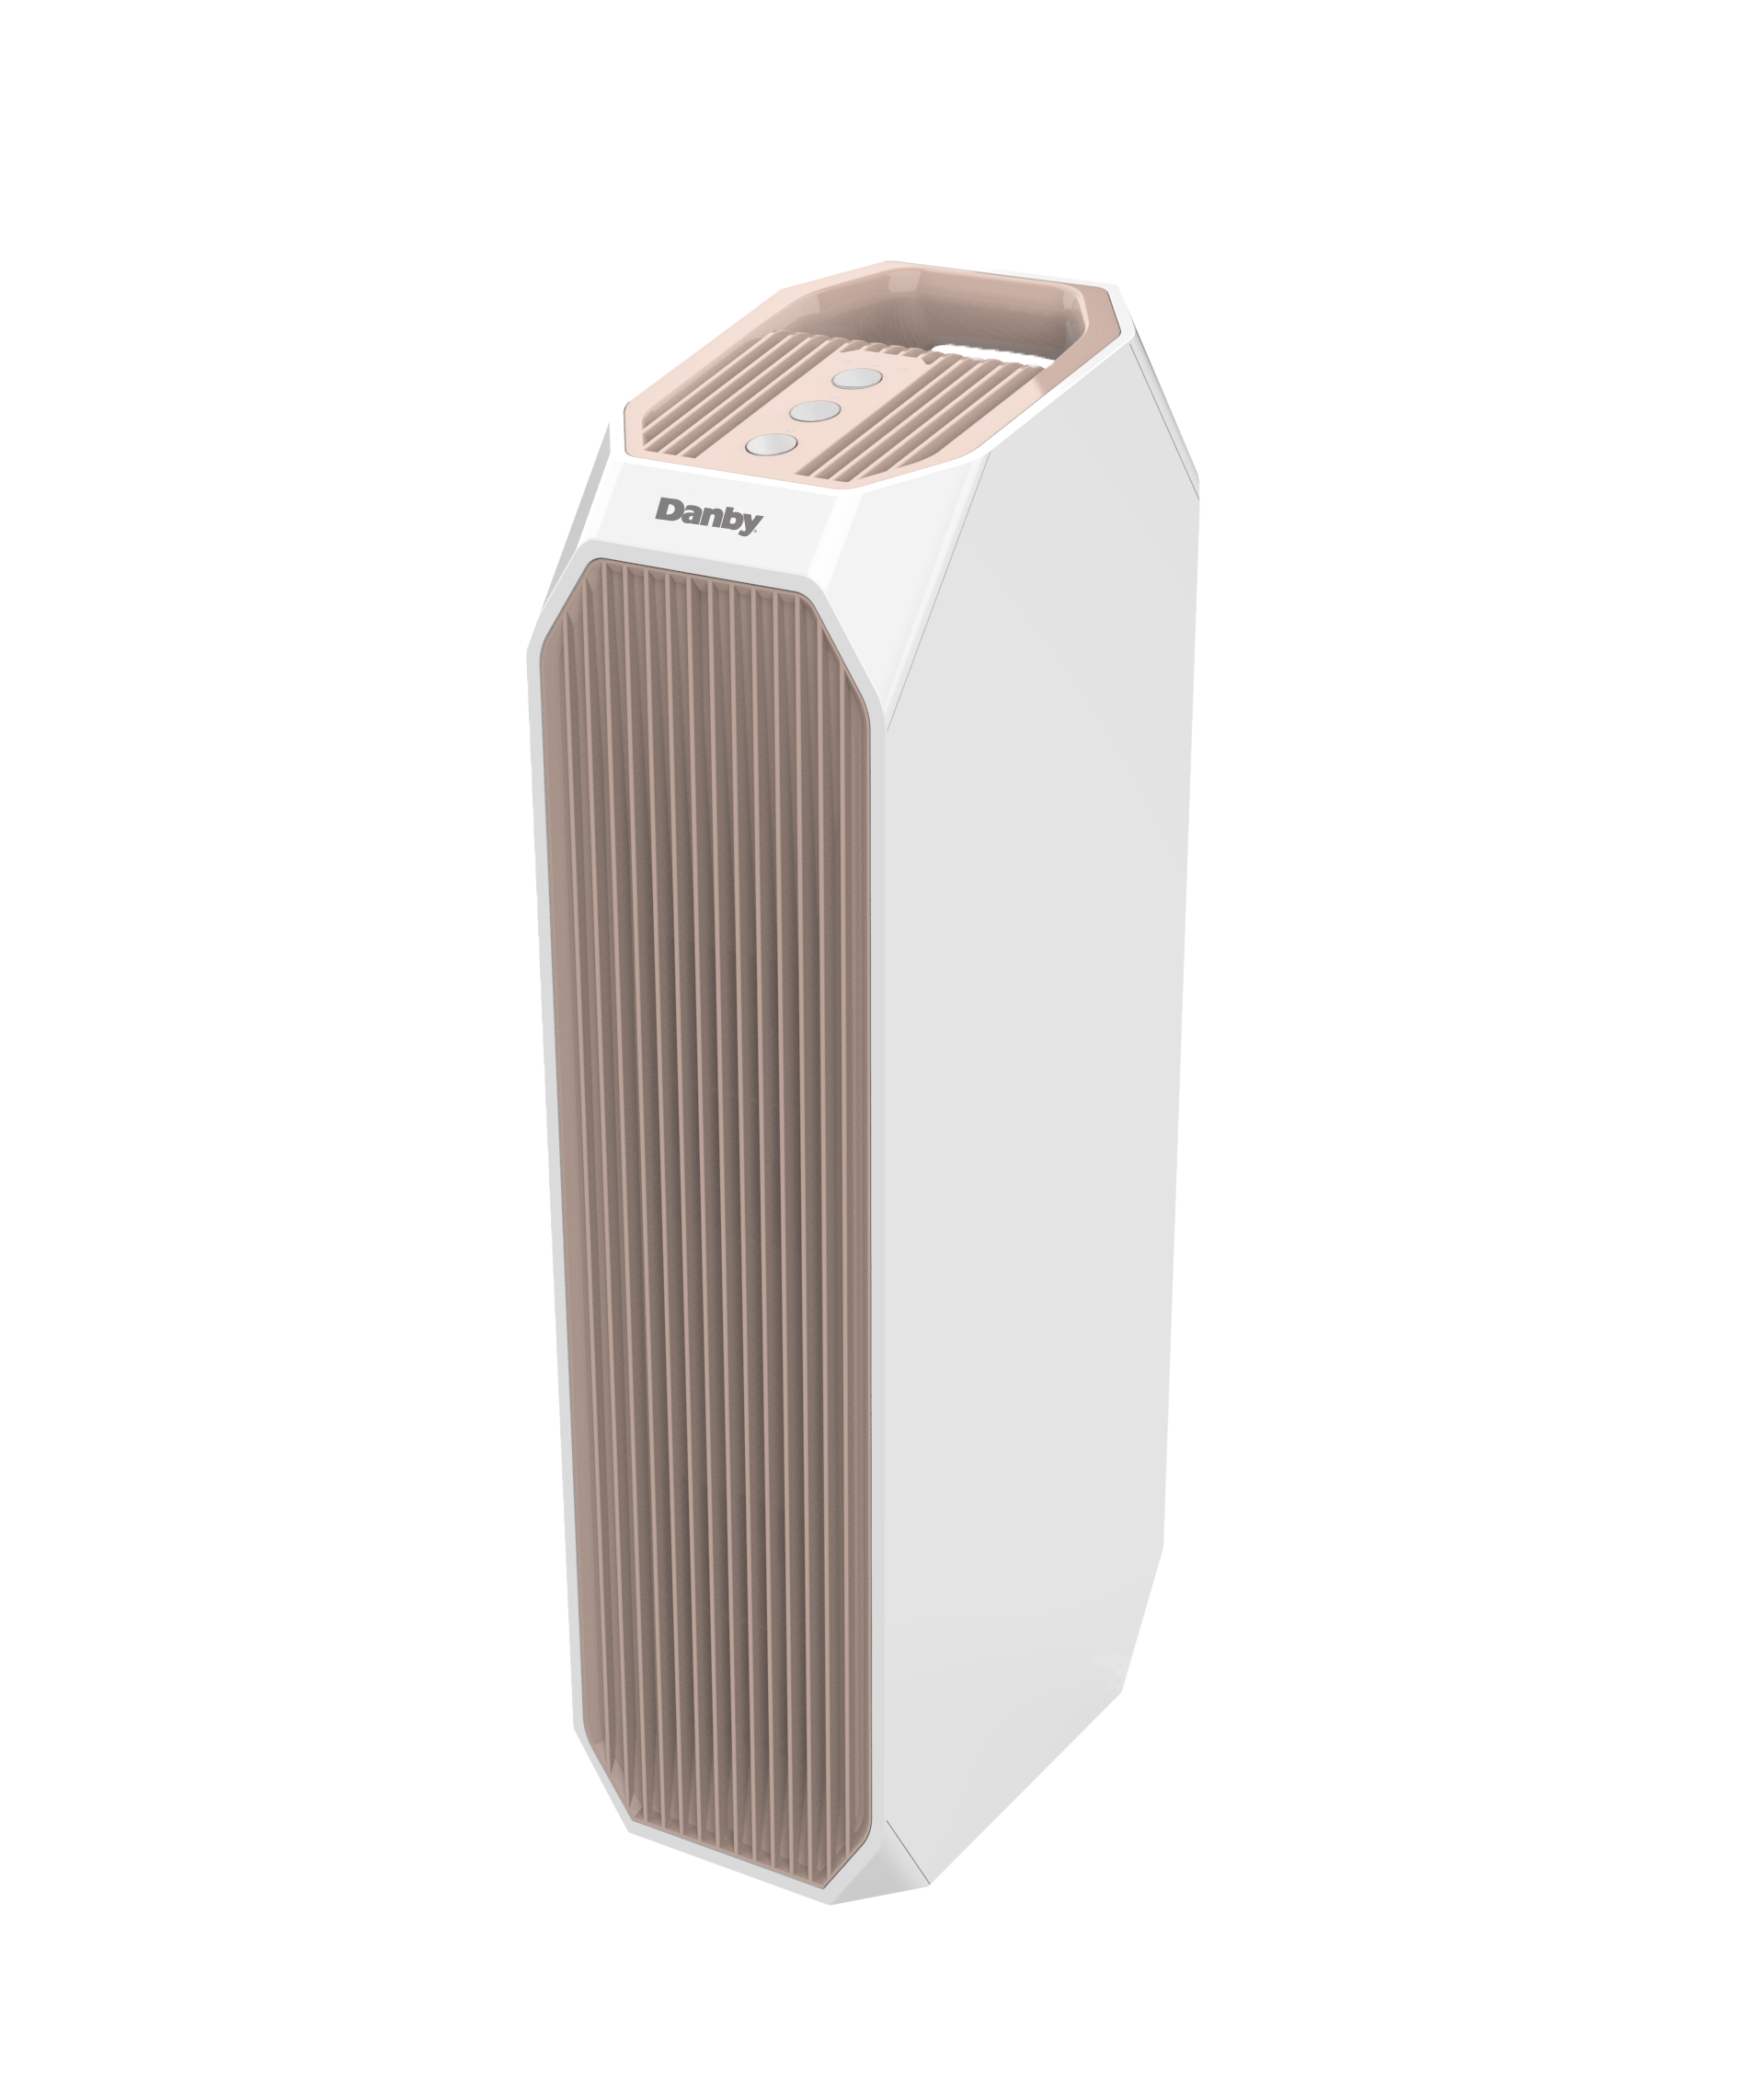 DAP143BAW-UV - Danby Air Purifier up to 222 sq. ft. , White